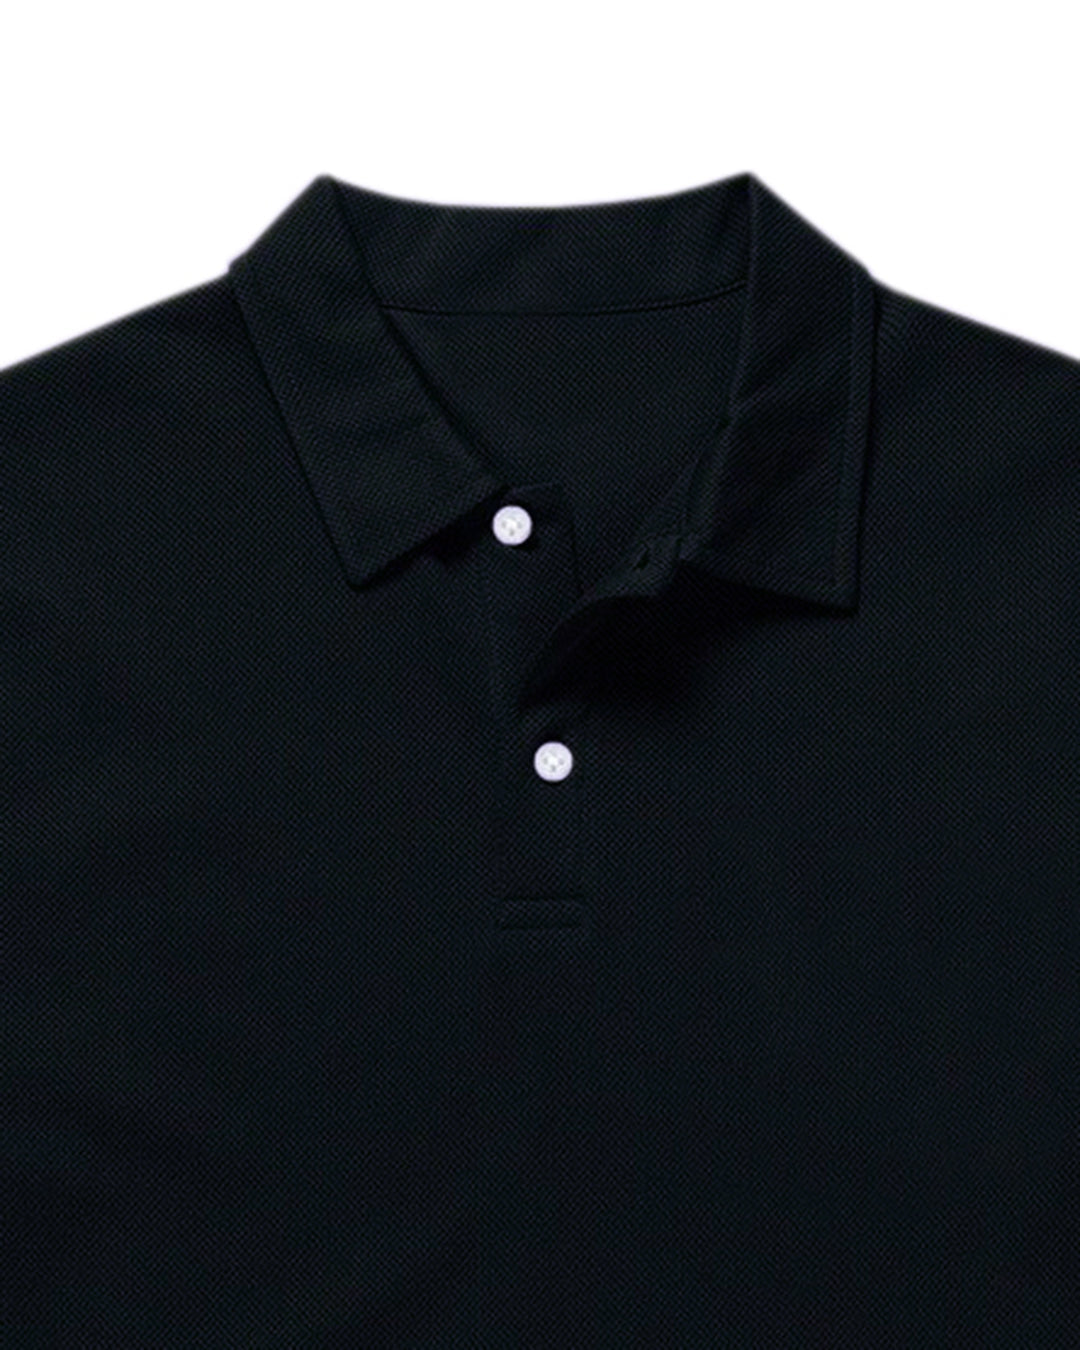 Collar of the custom oxford polo shirt for men by Luxire in dark indigo